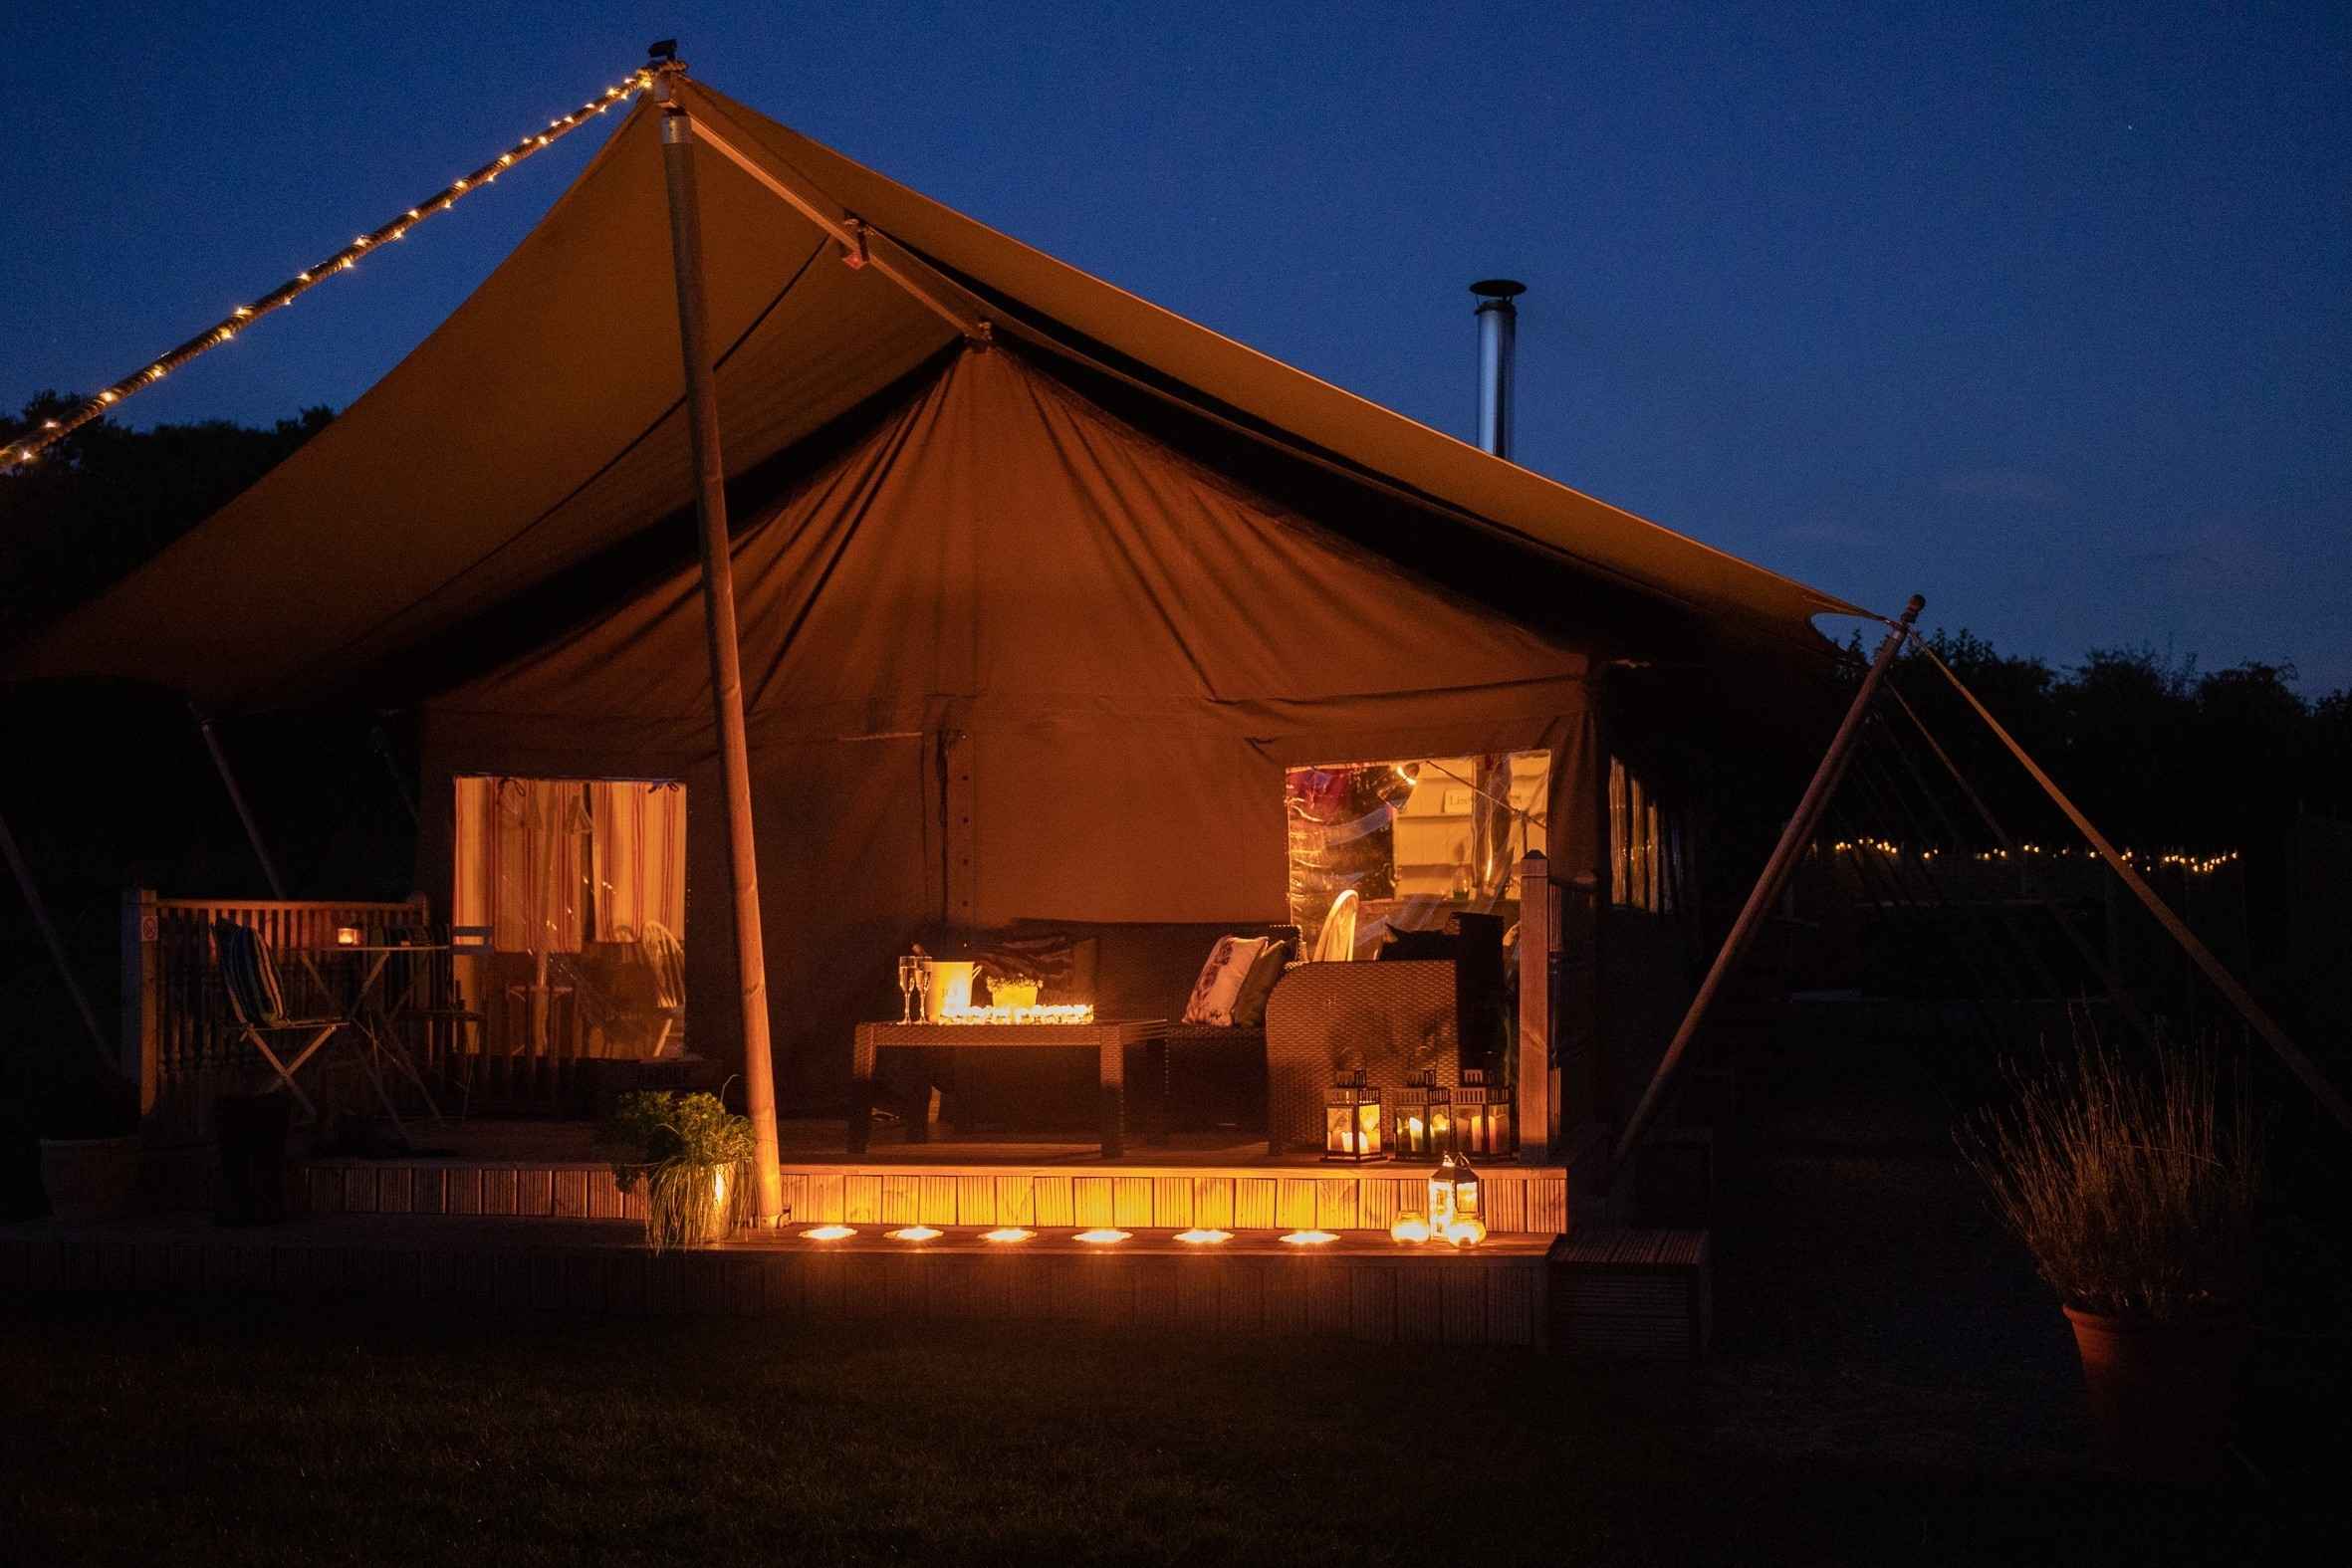 safari-tent-lit-up-at-night-seven-hills-hideaway-safari-tents-monmouthshire